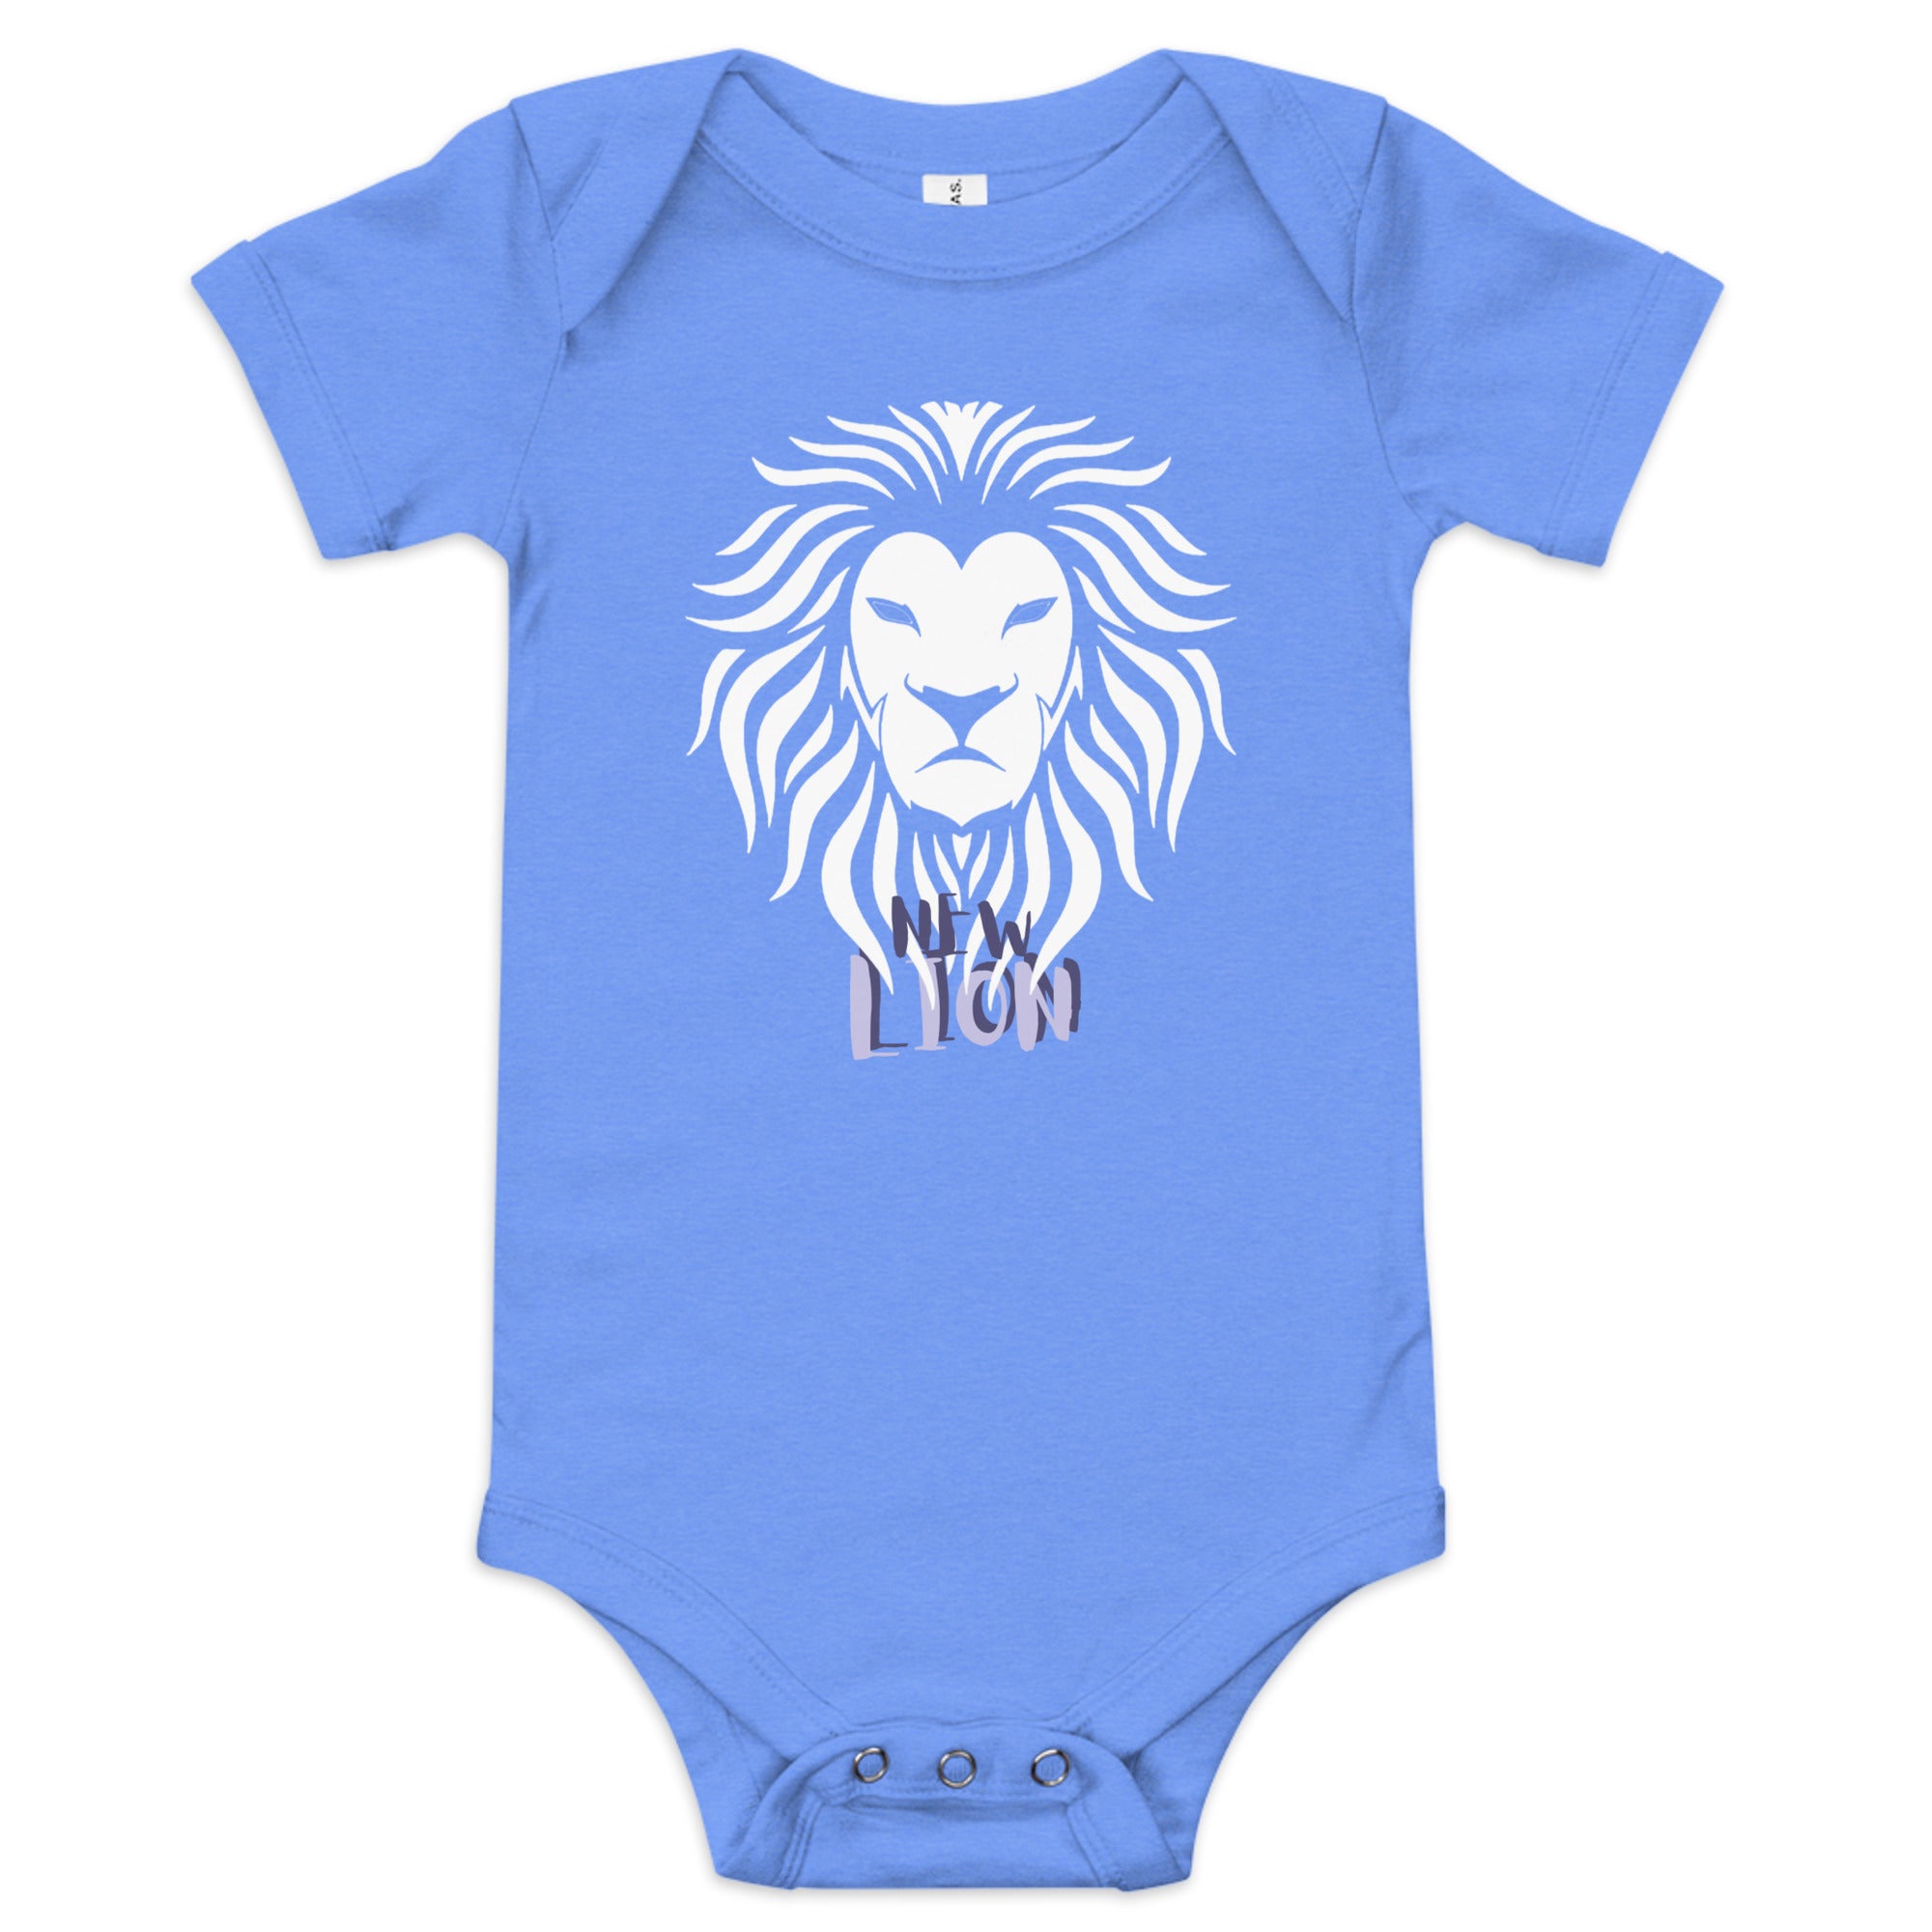 BGFC's Future Champion - "New Lion" Baby Short Sleeve Onesie